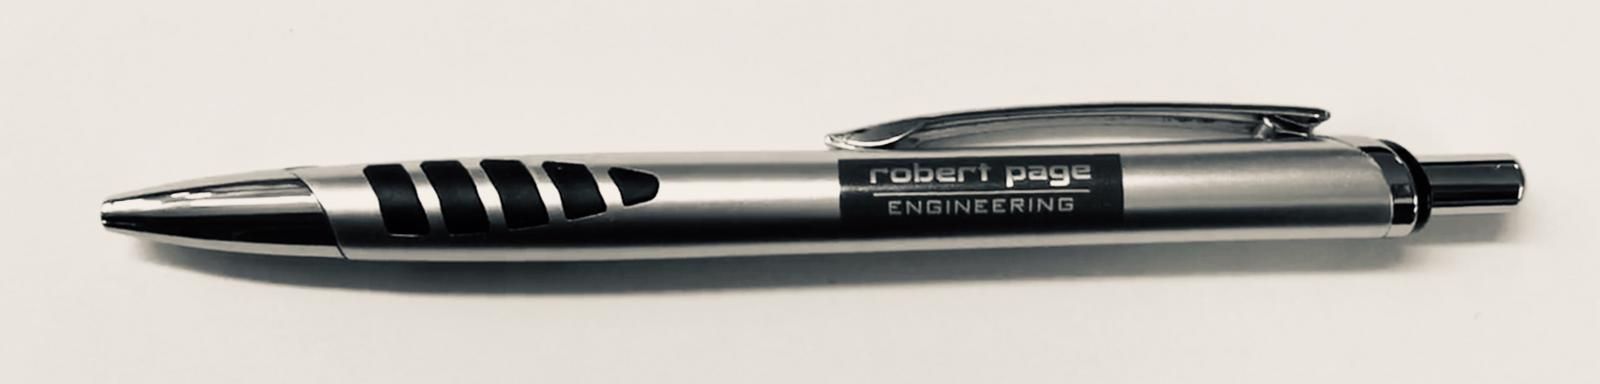 Robert Page Engineering Branded Pen